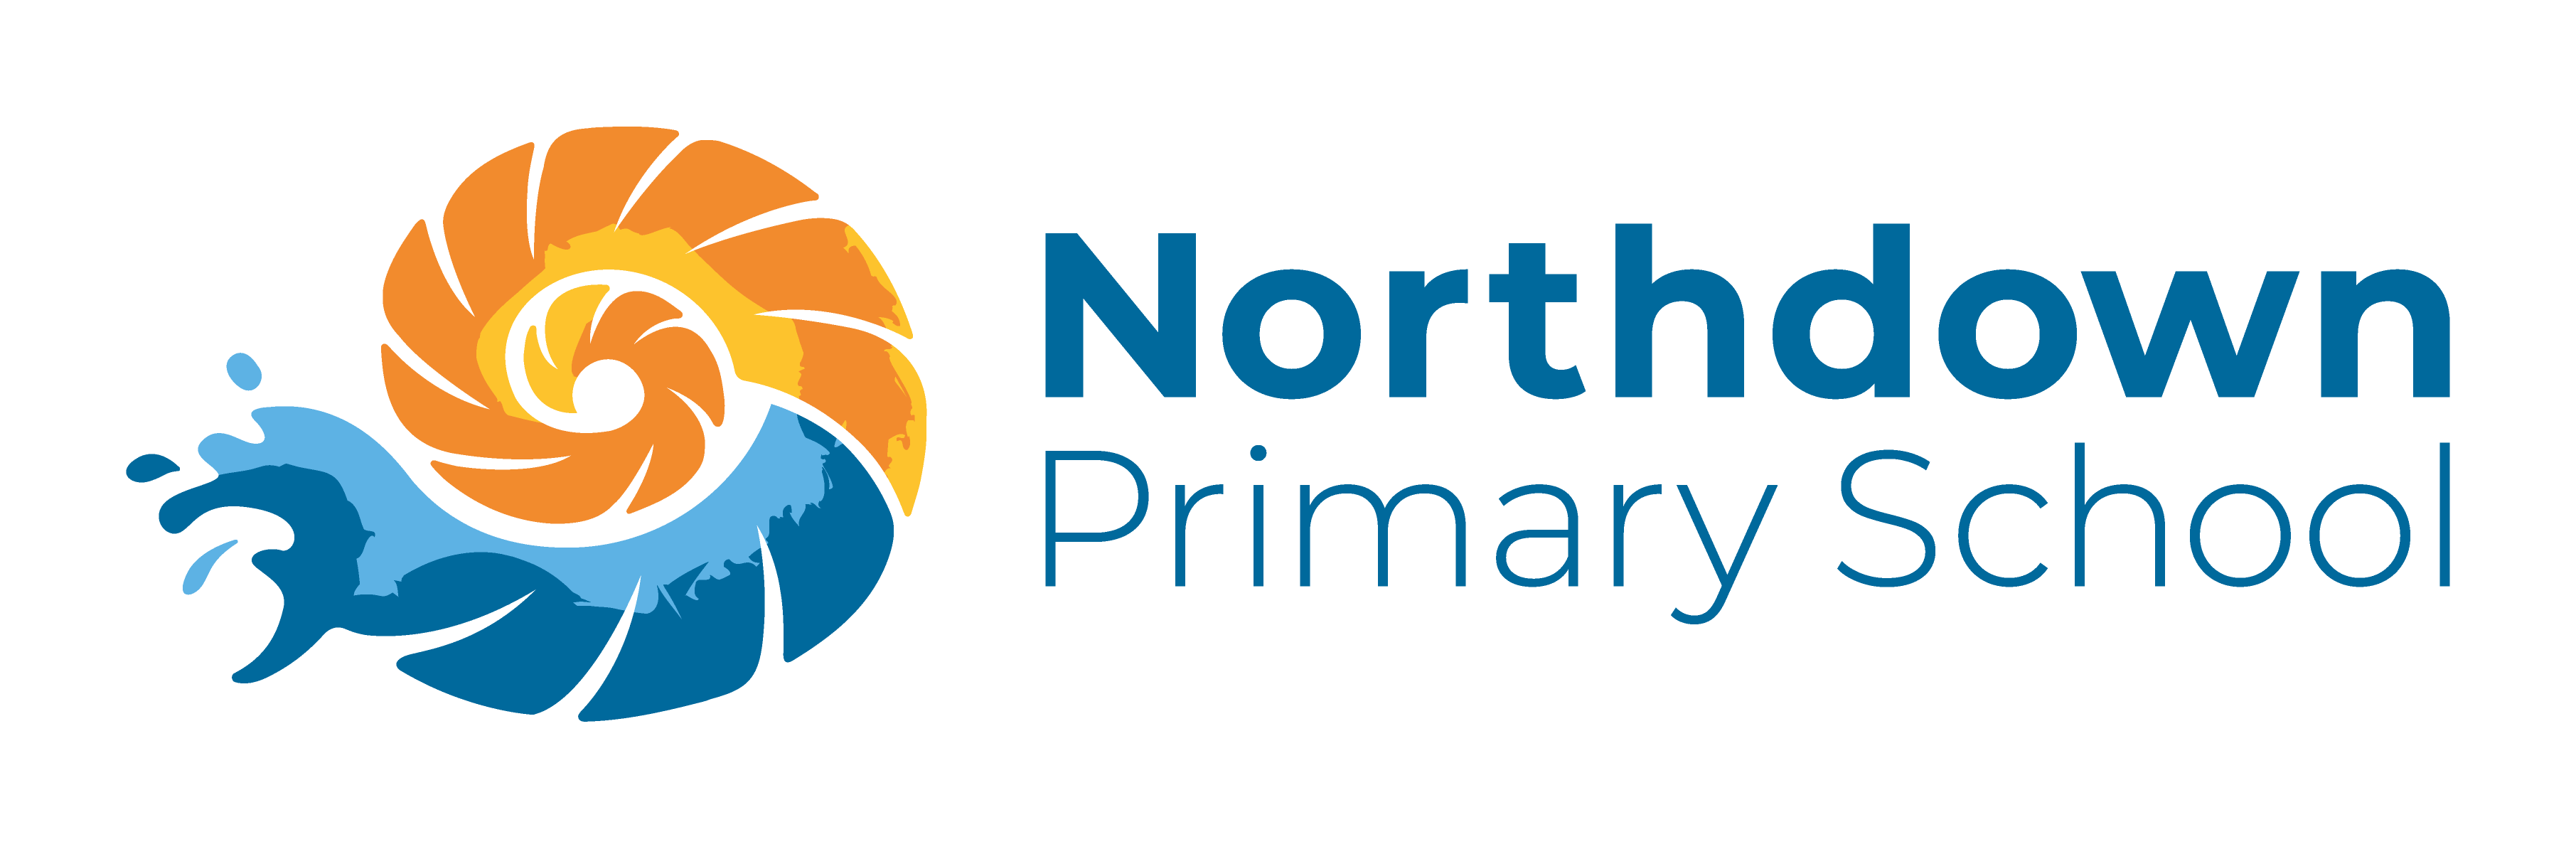 Northdown Primary School - Logo